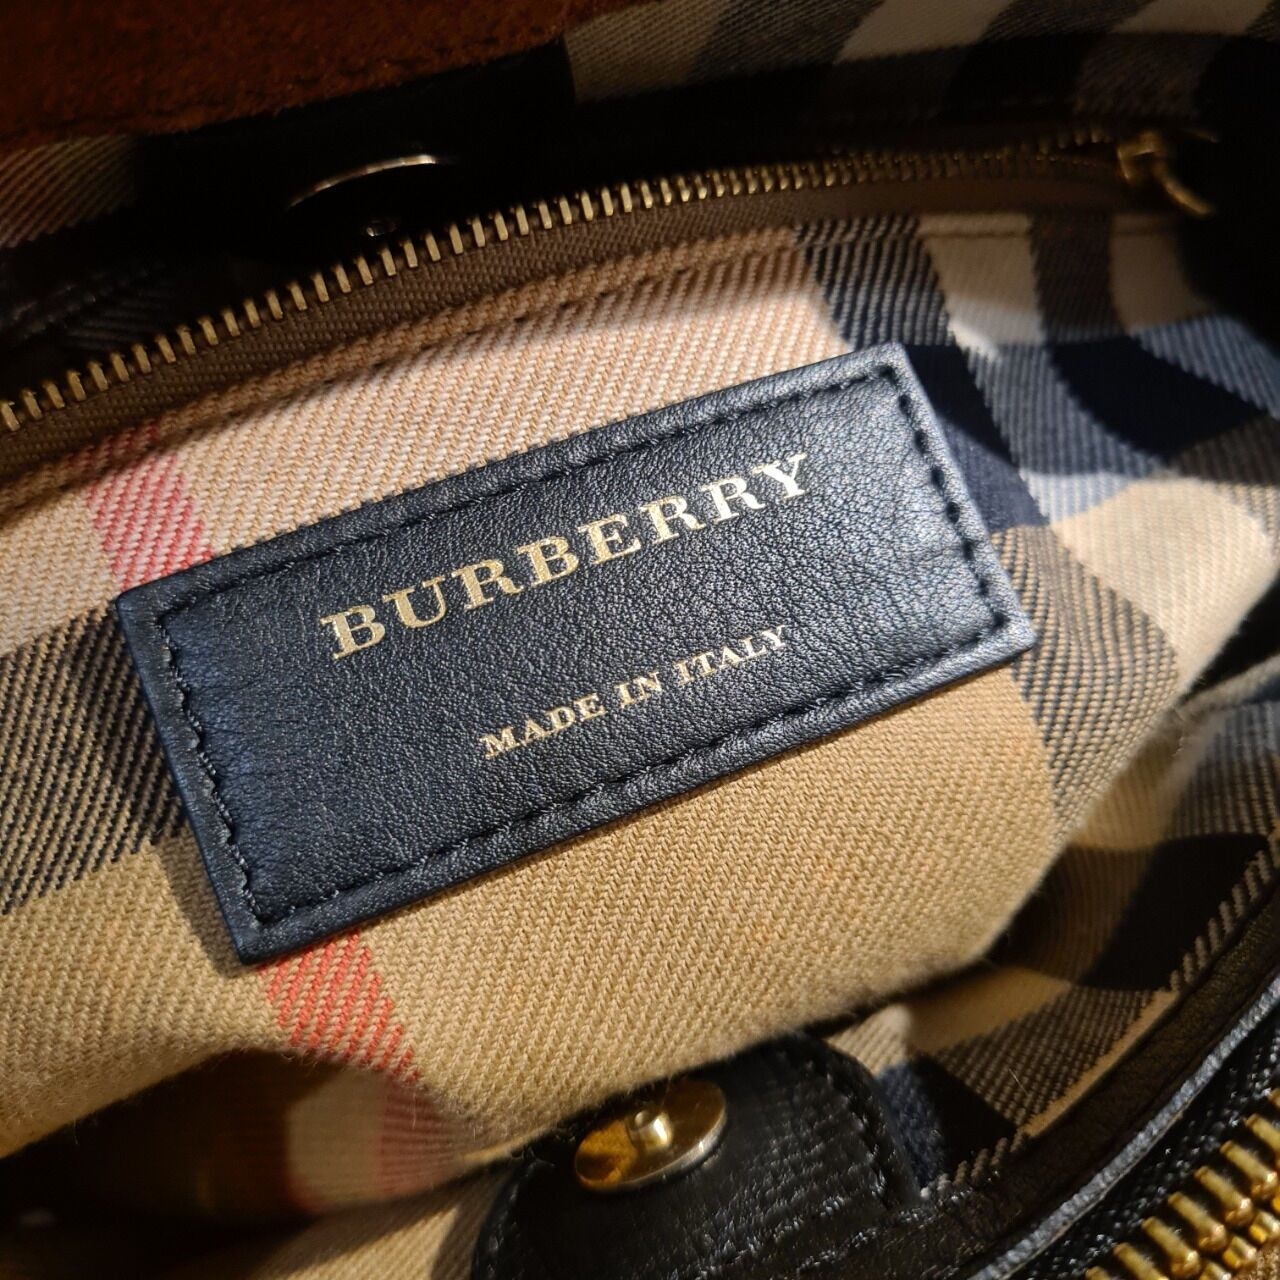 Burberry Medium Banner Bag